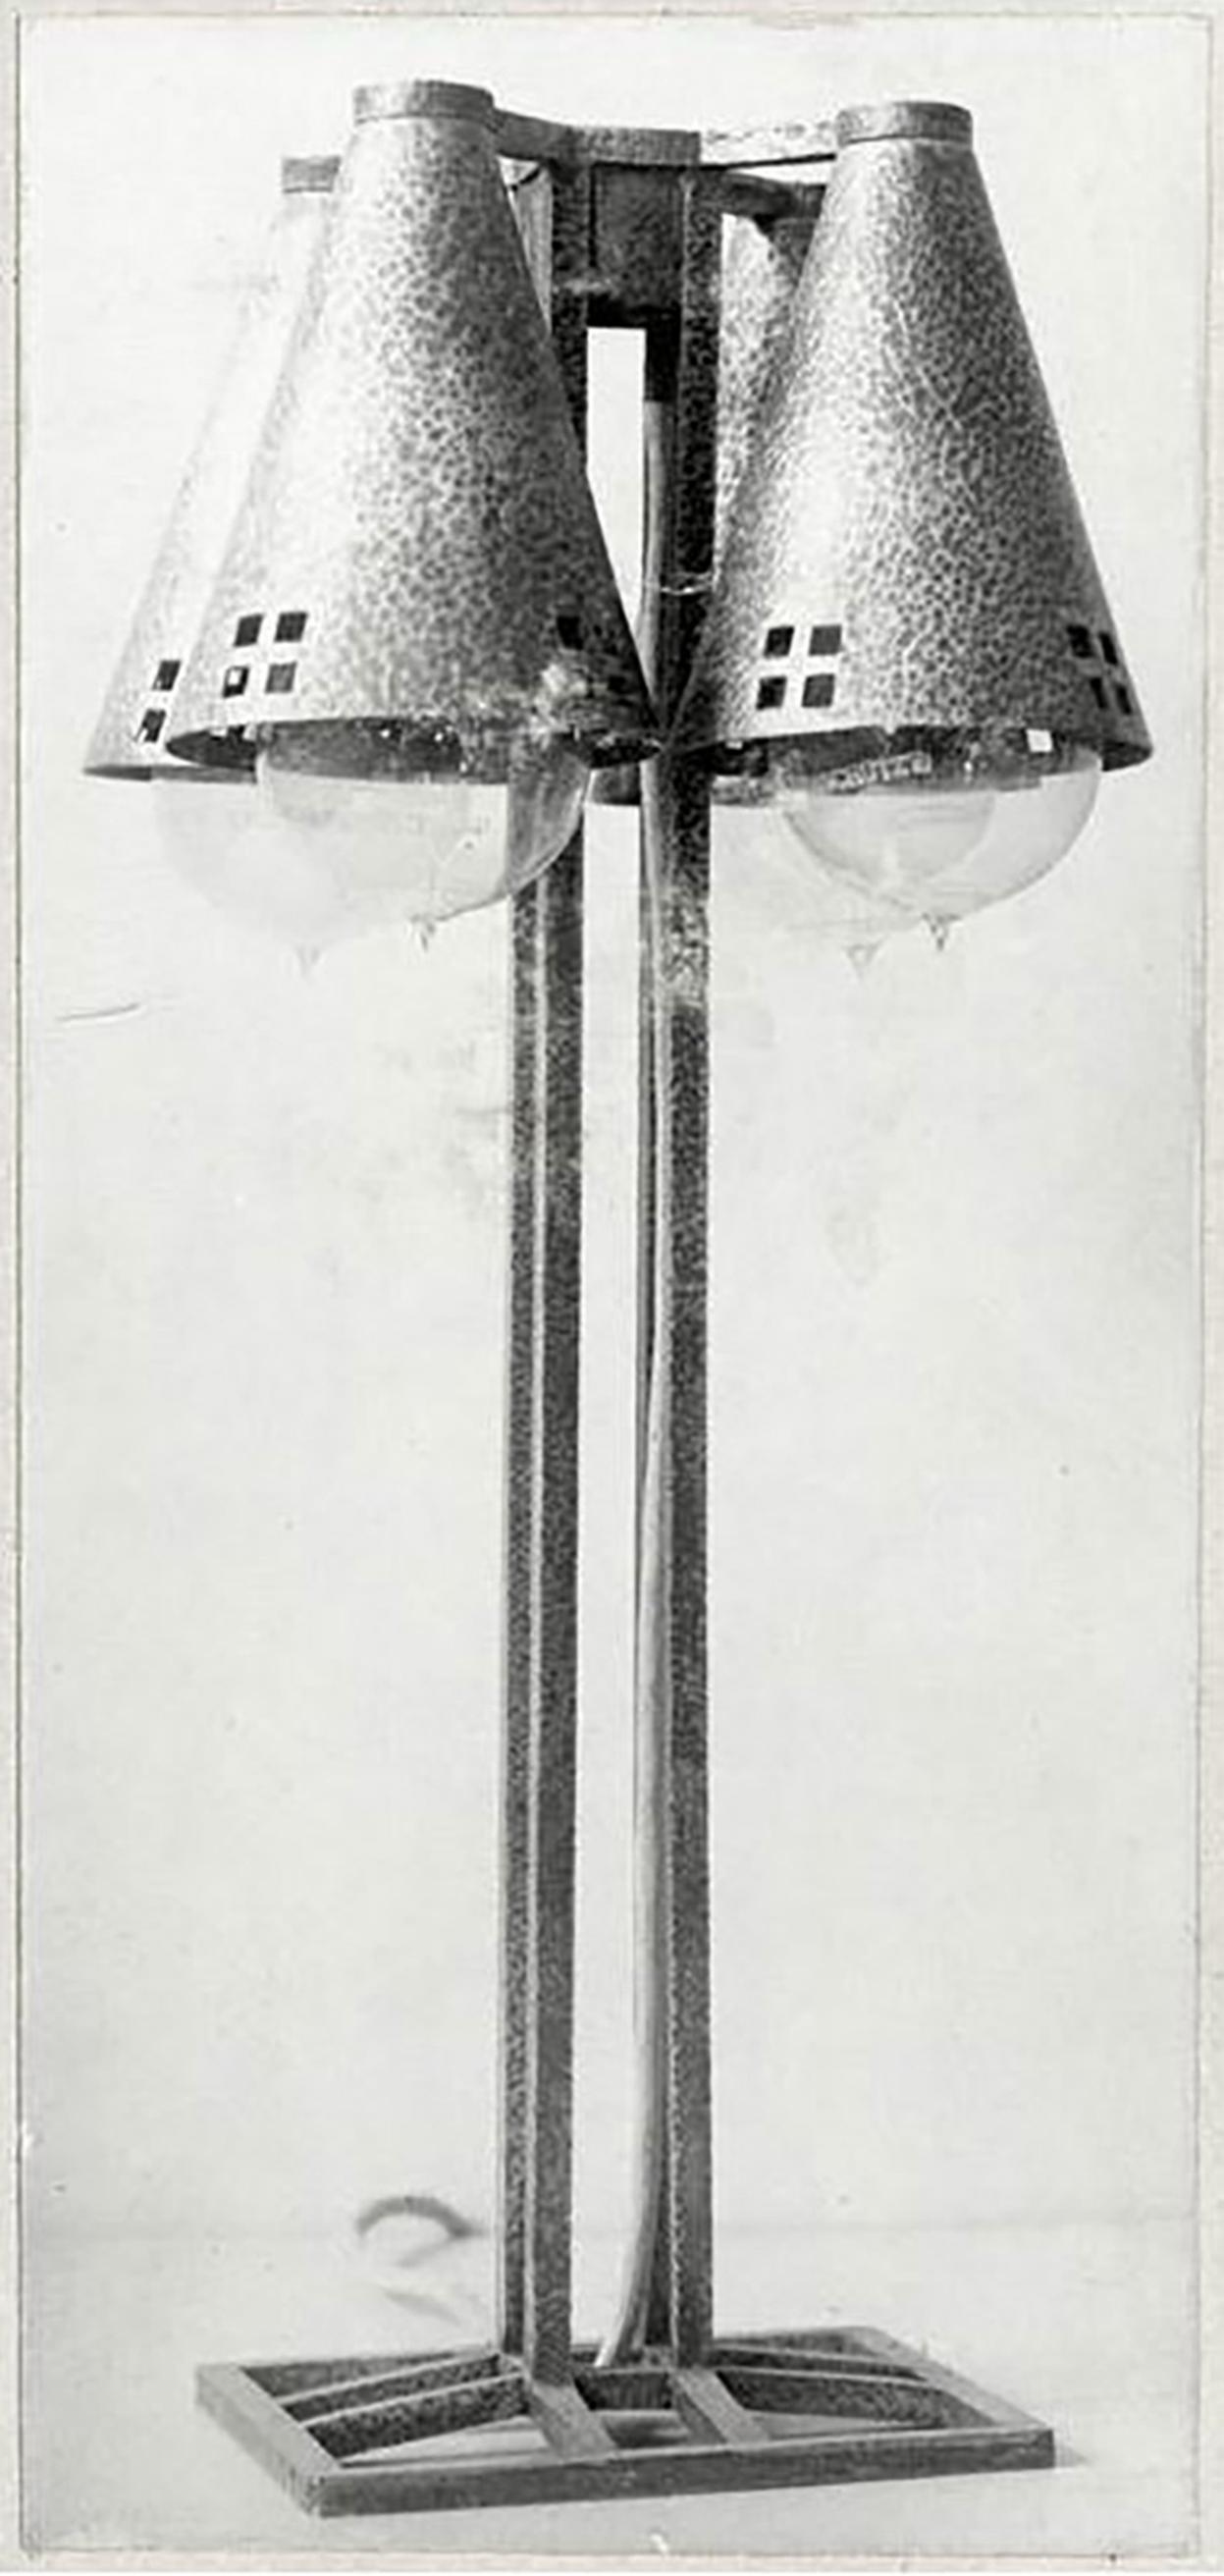 Hammered Cubistic Josef Hoffmann / Wiener Werkstätte Table Lamp, Re Edition For Sale